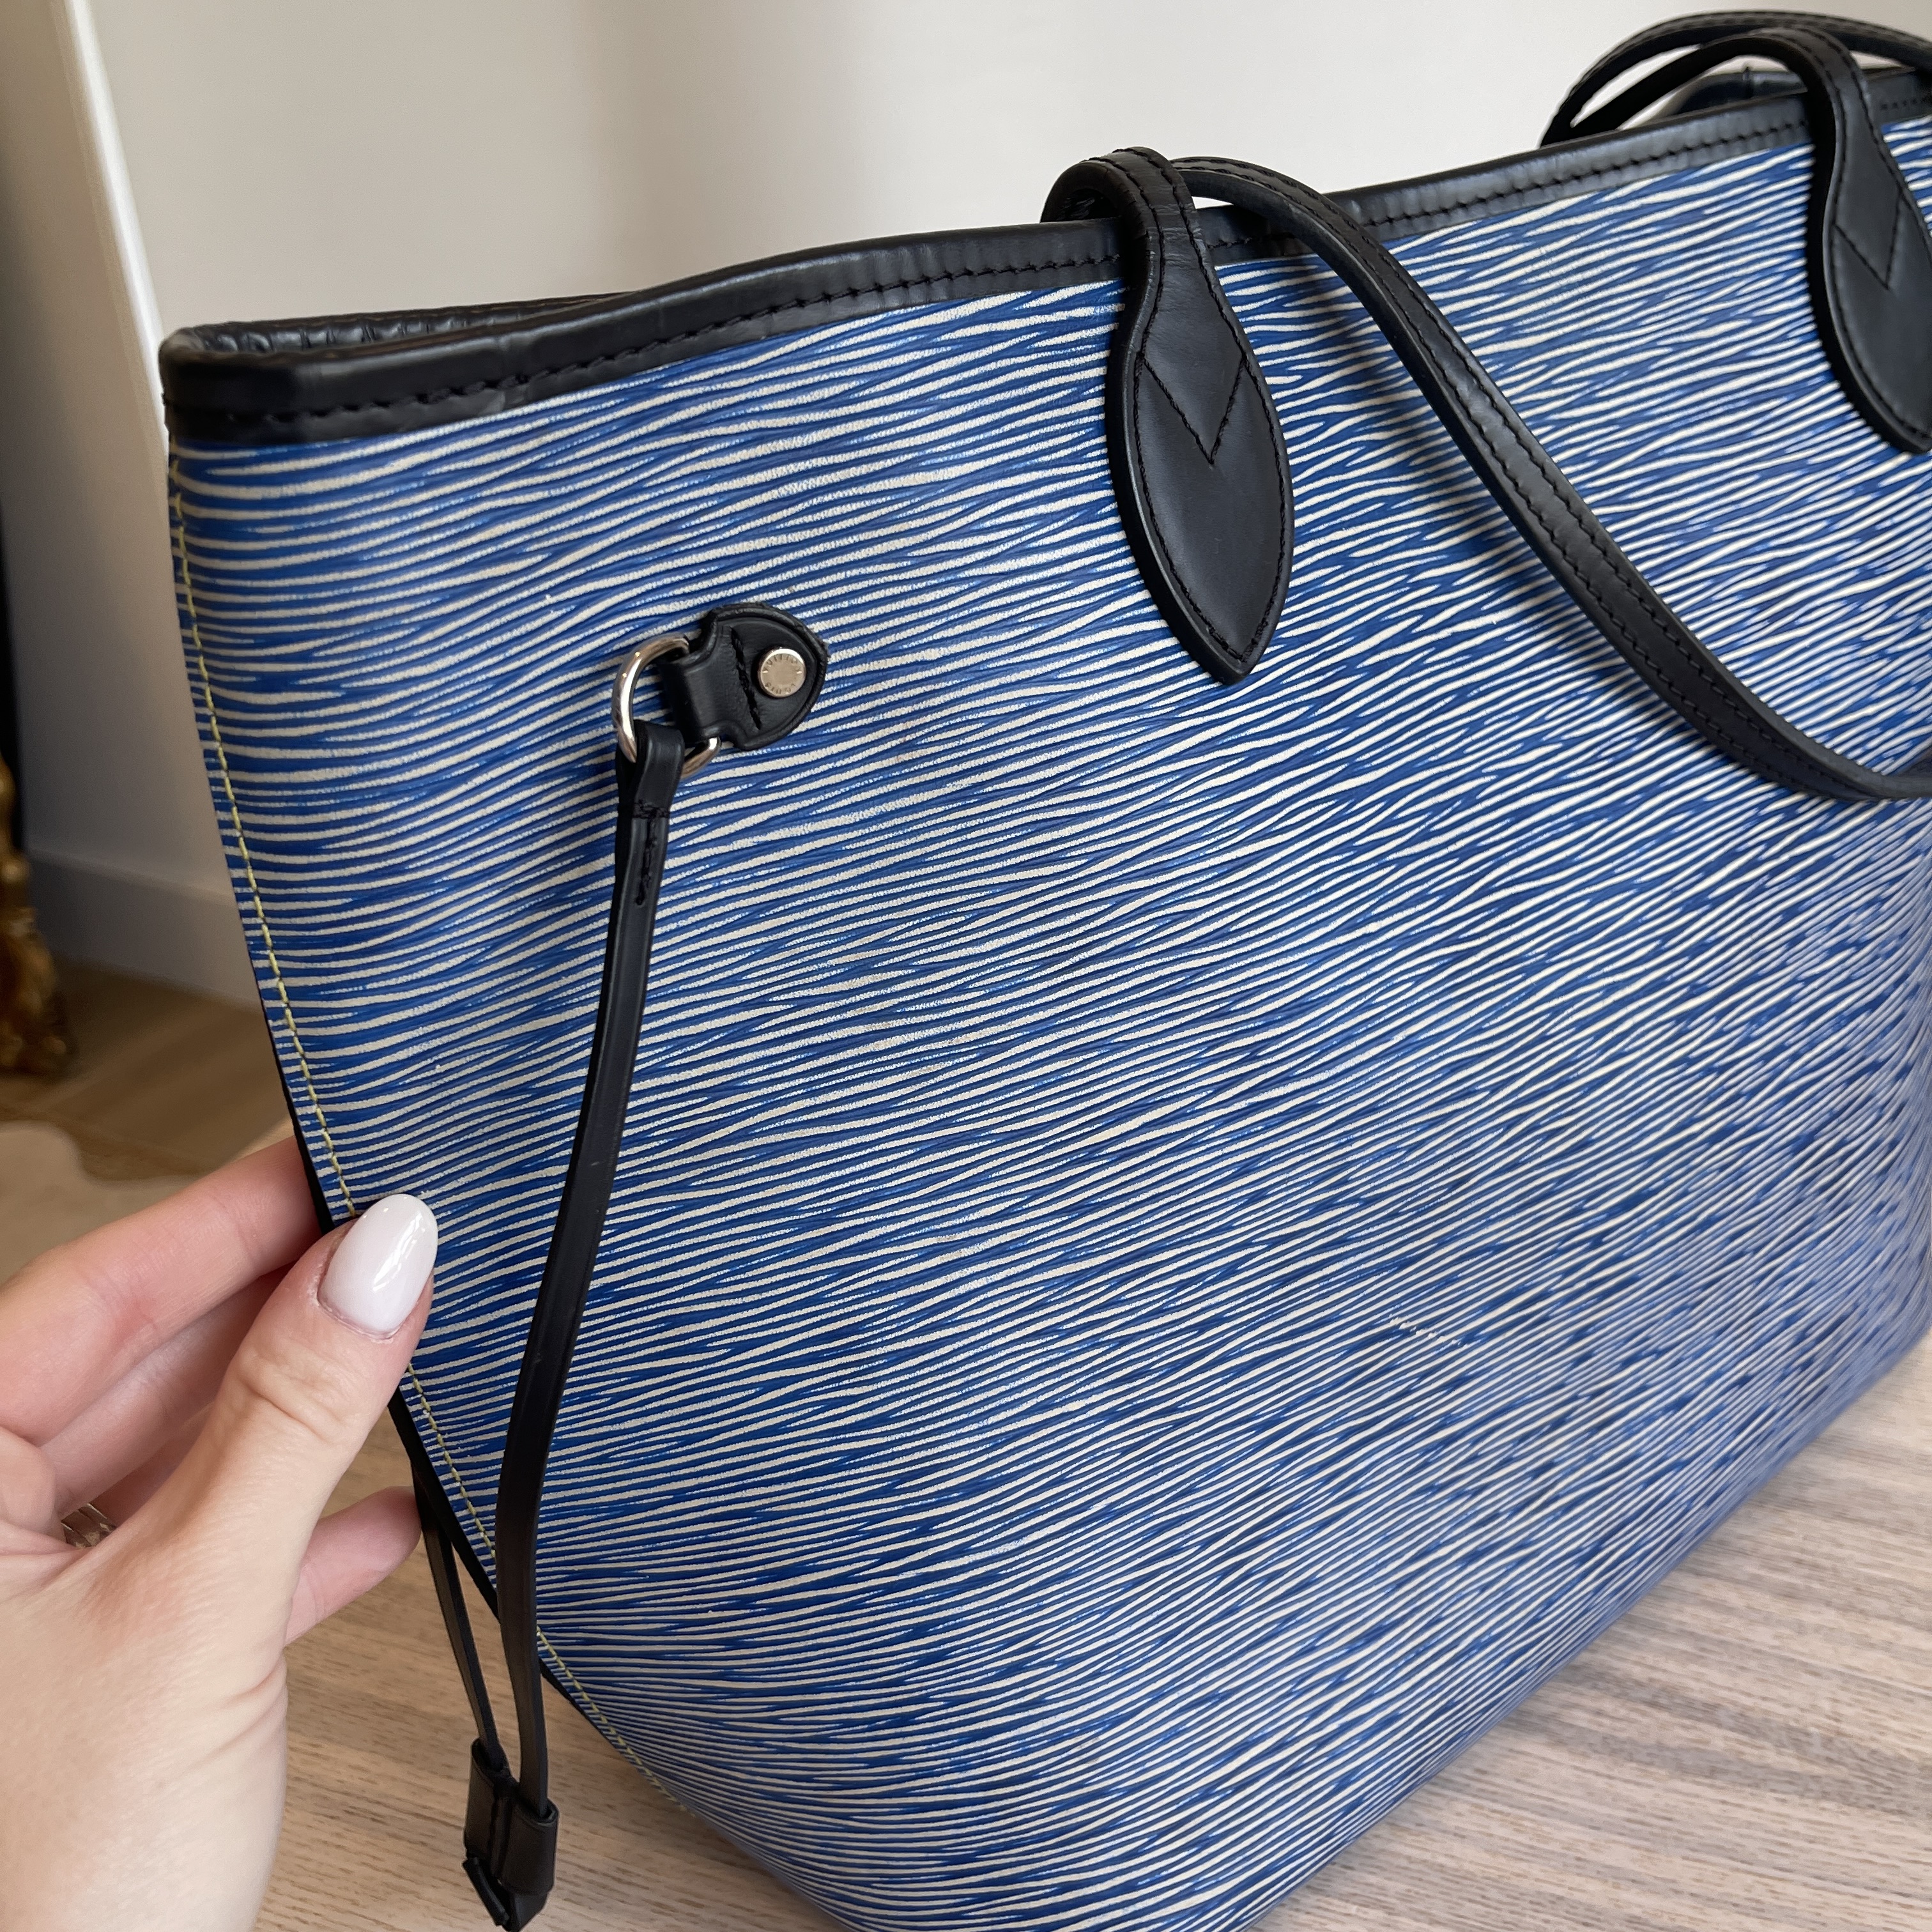 Louis Vuitton Bag Neverfull Mm Epi Leather Bleu Denim W/added